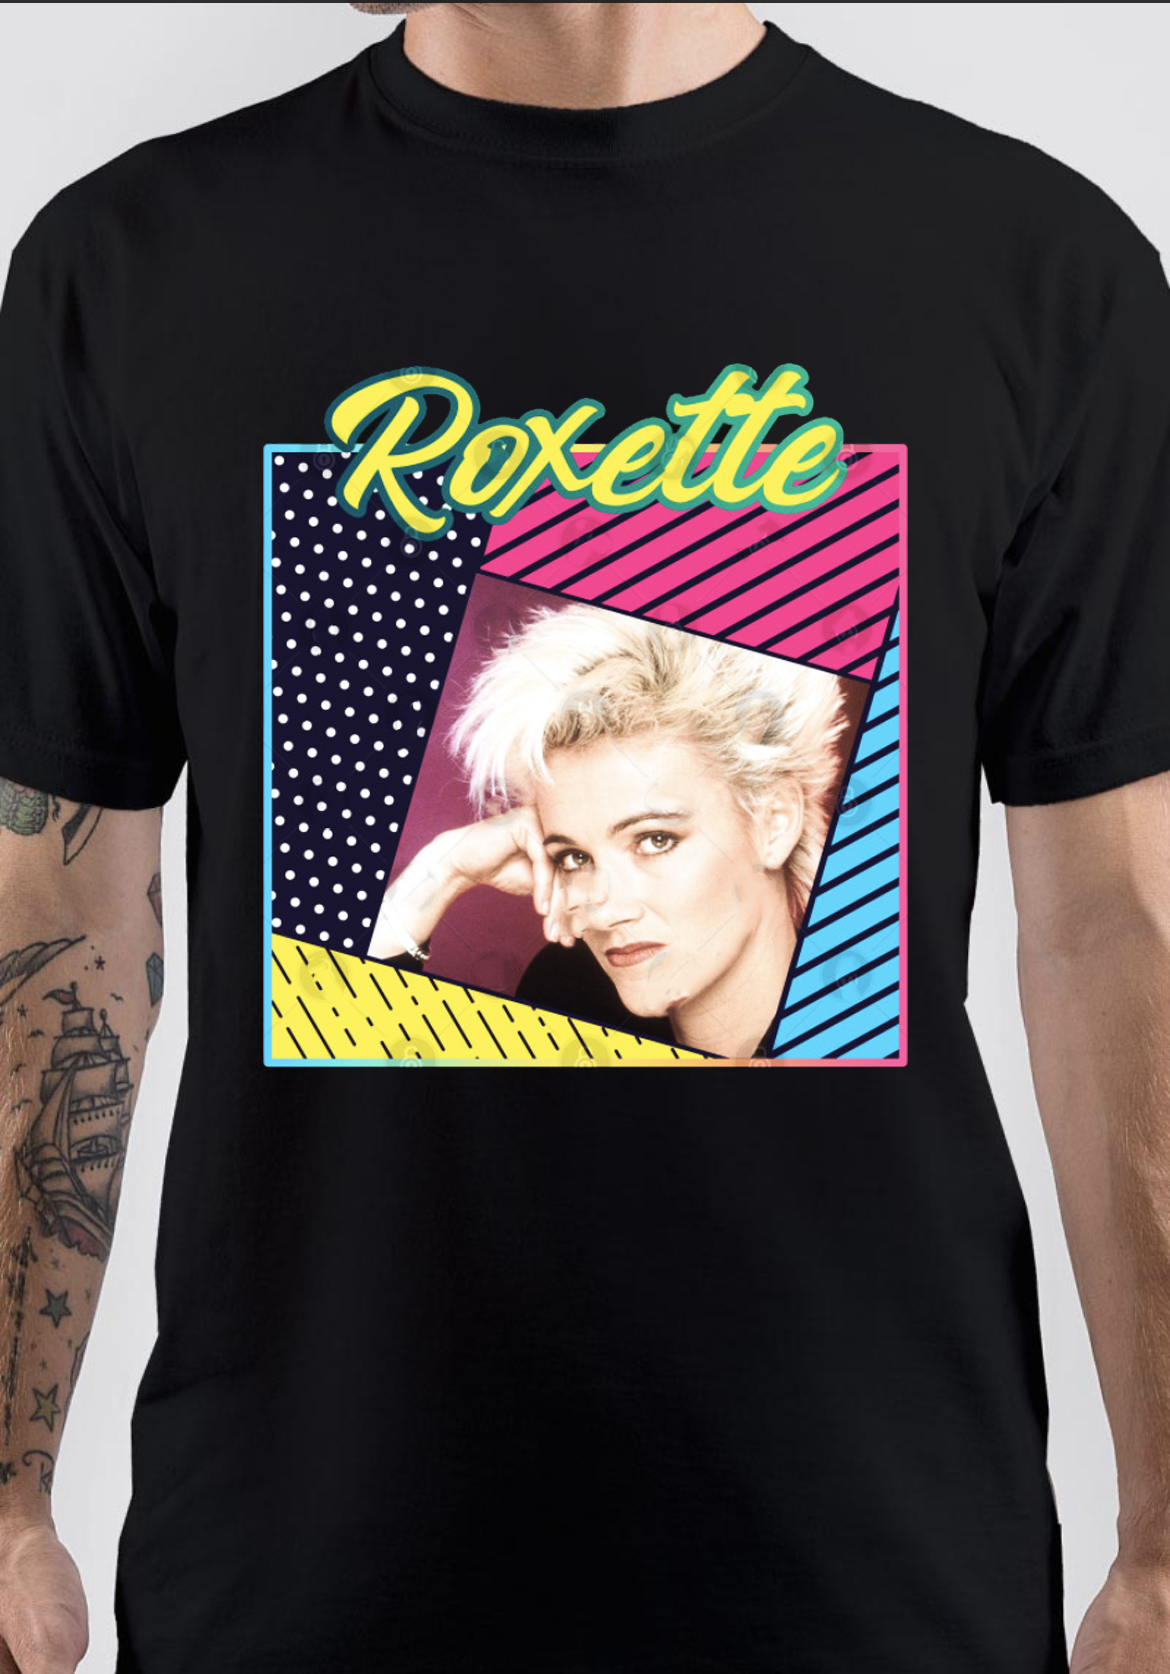 roxette tour shirt